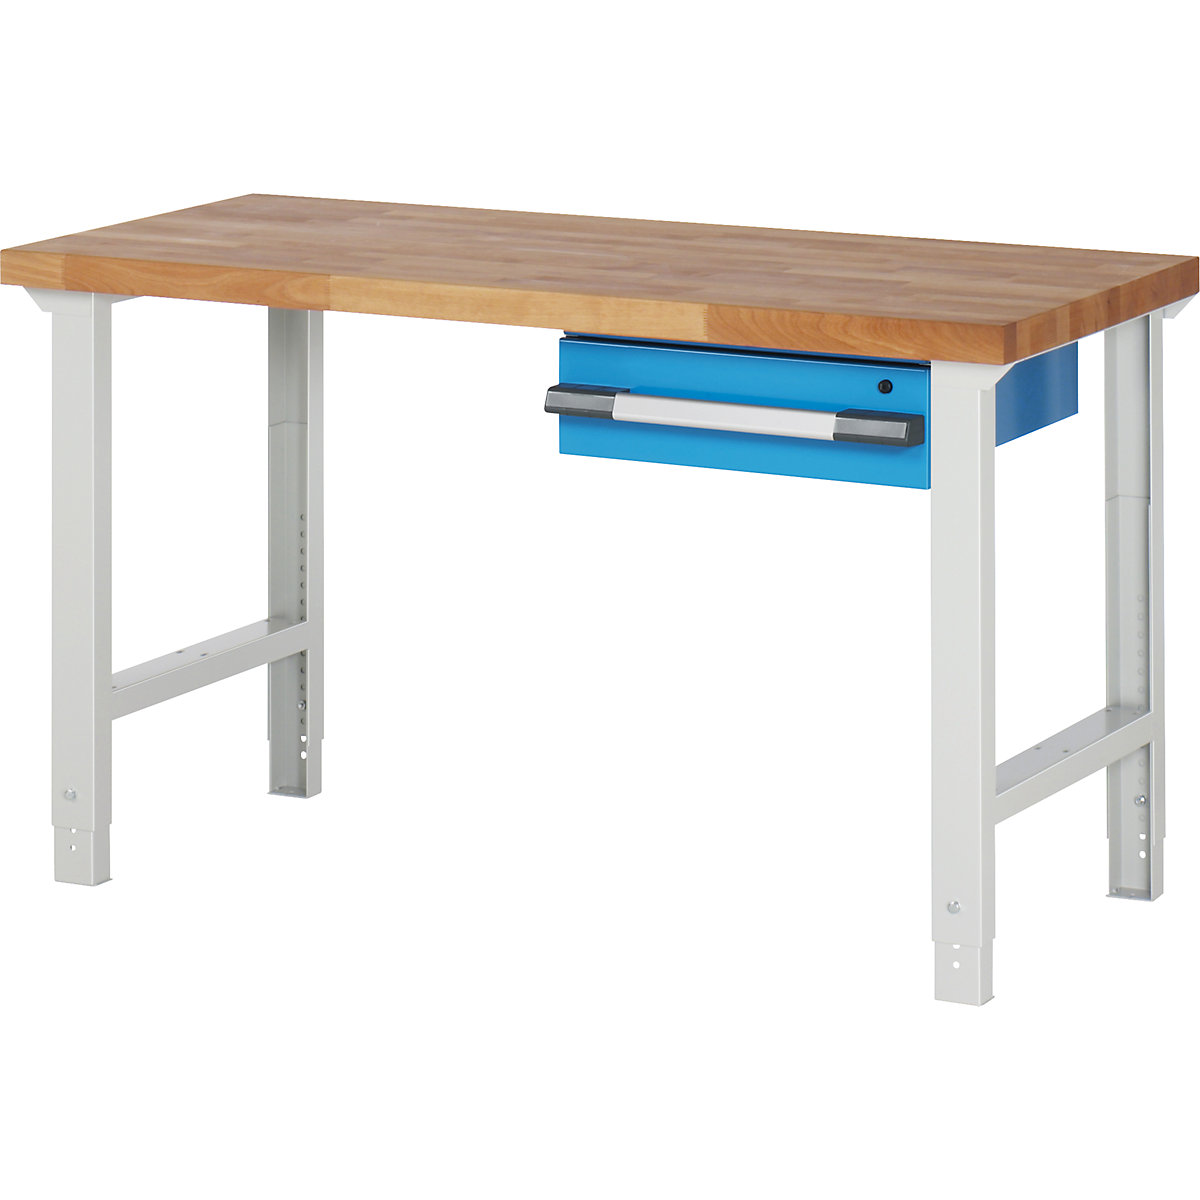 EUROKRAFTpro – Modulna delovna miza, 1 viseč predal, ŠxG 1500 x 700 mm